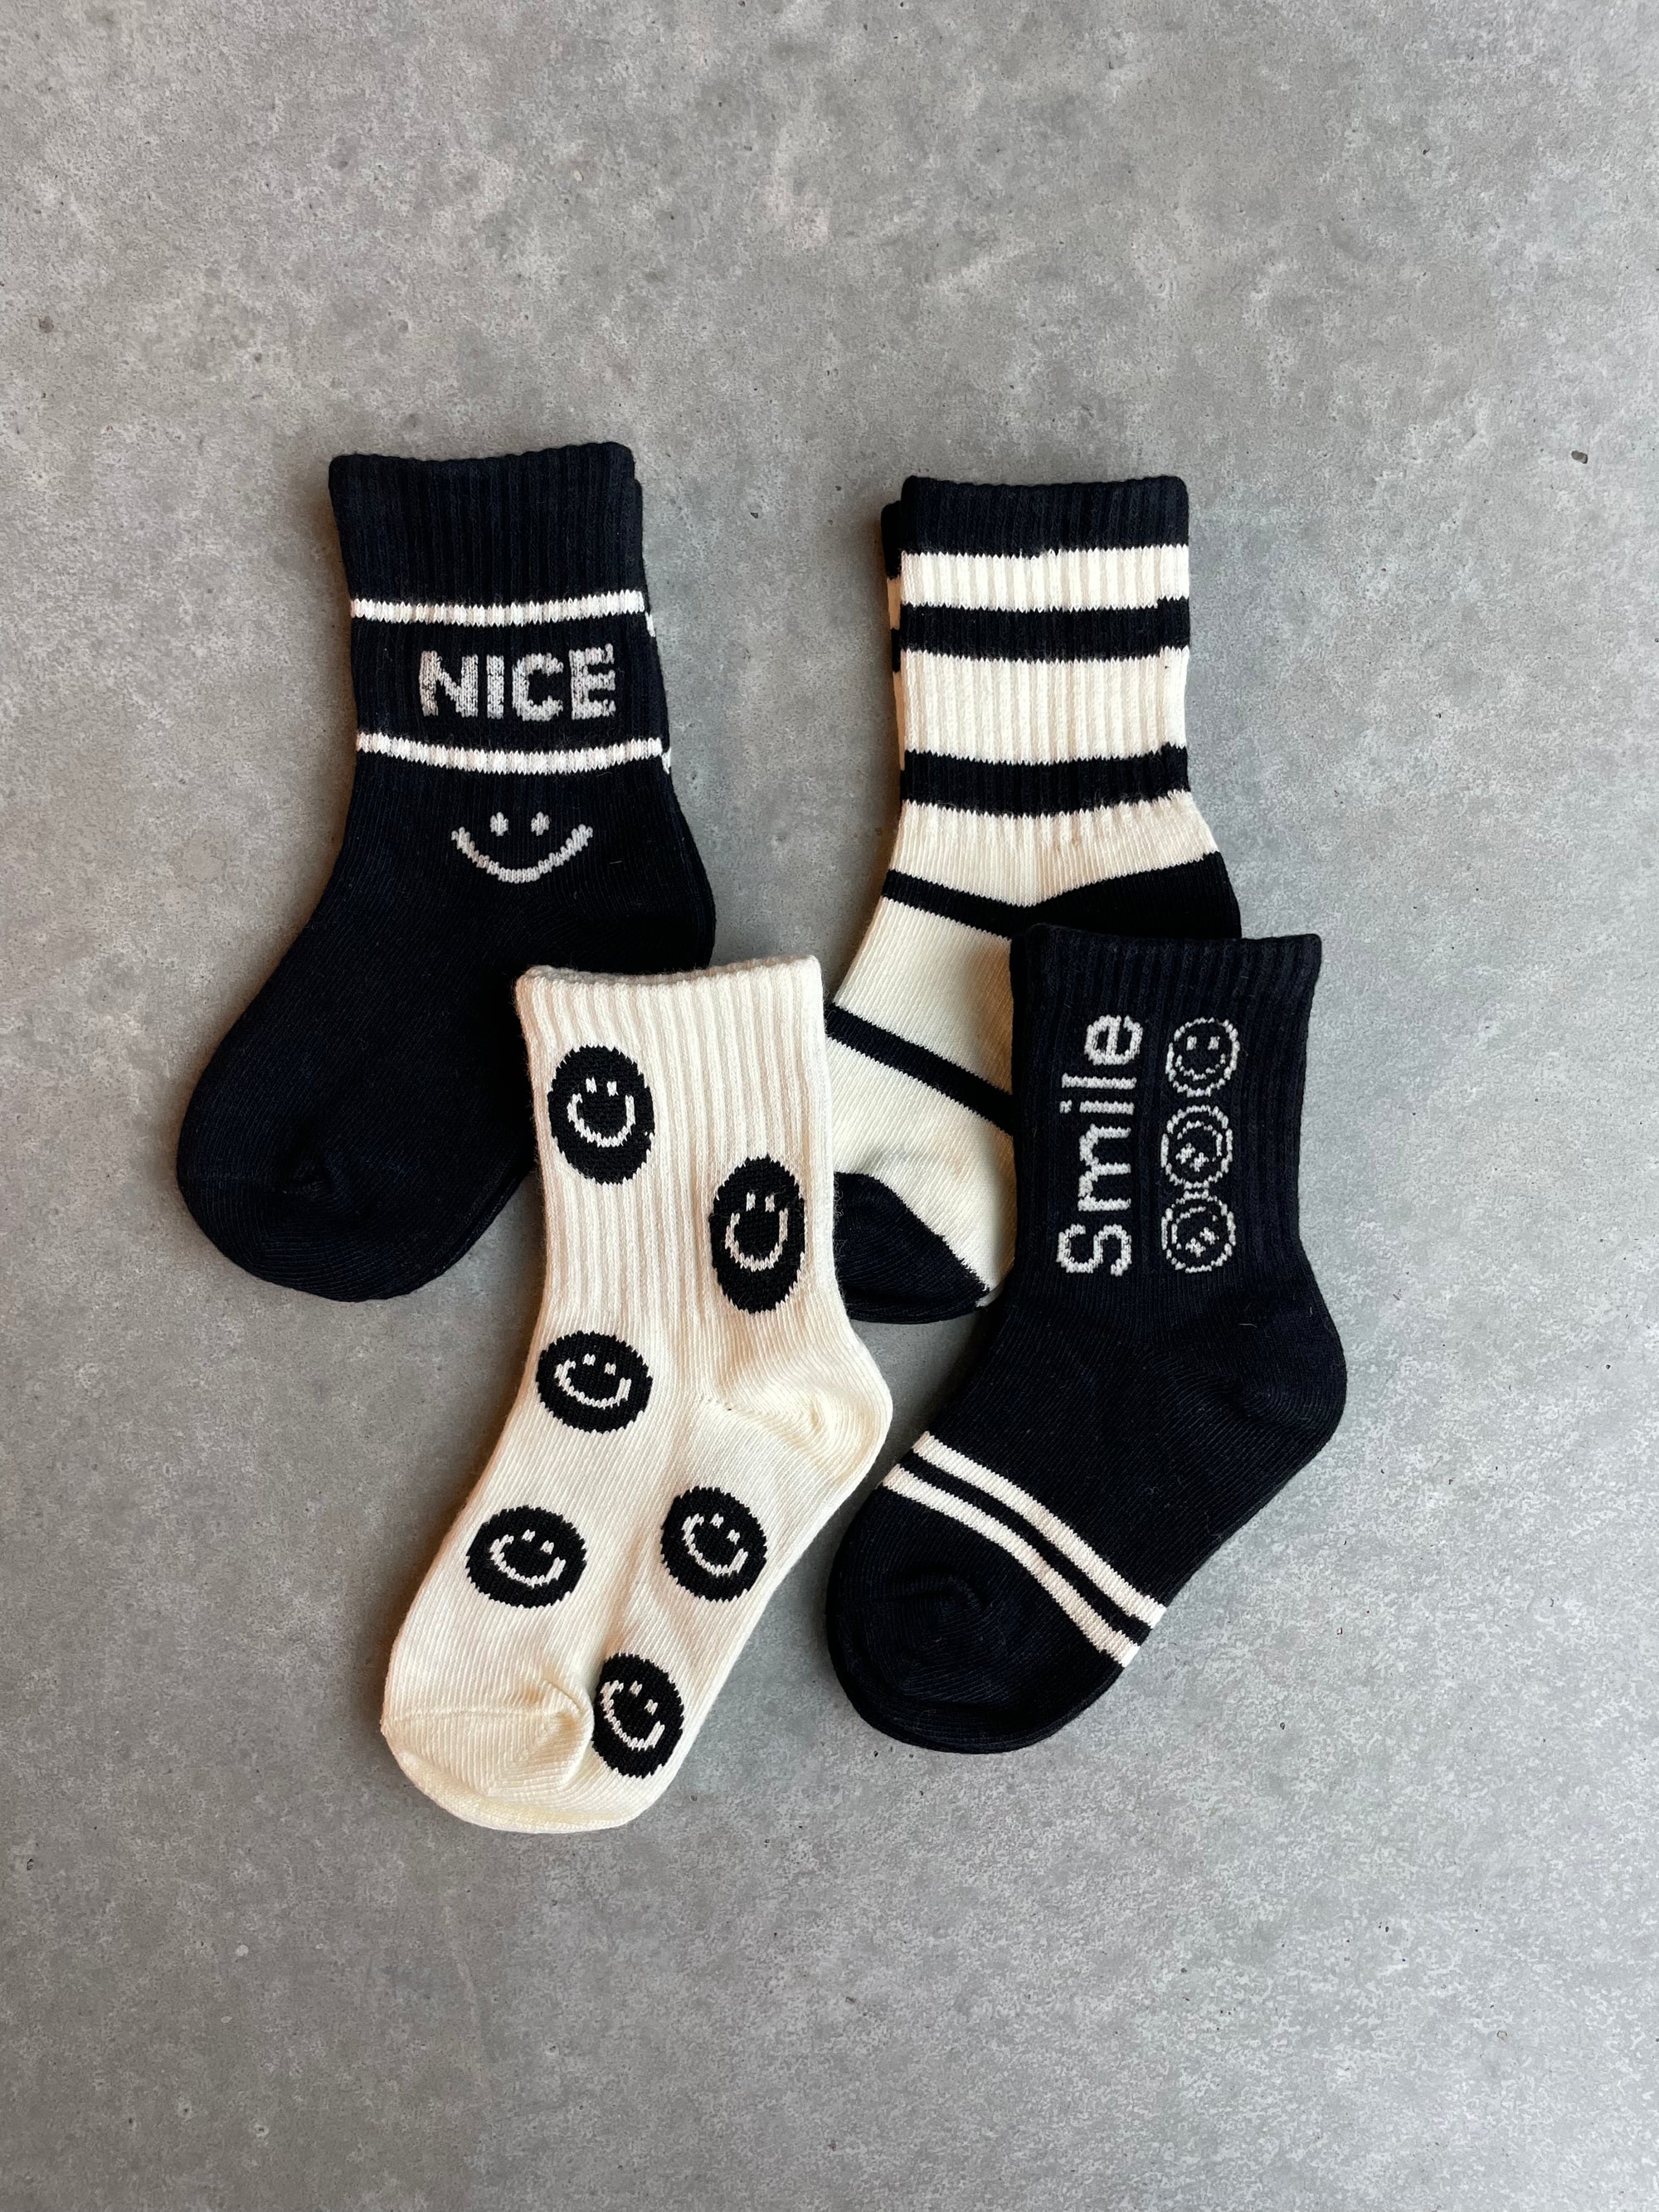 Smiley socks - black & white